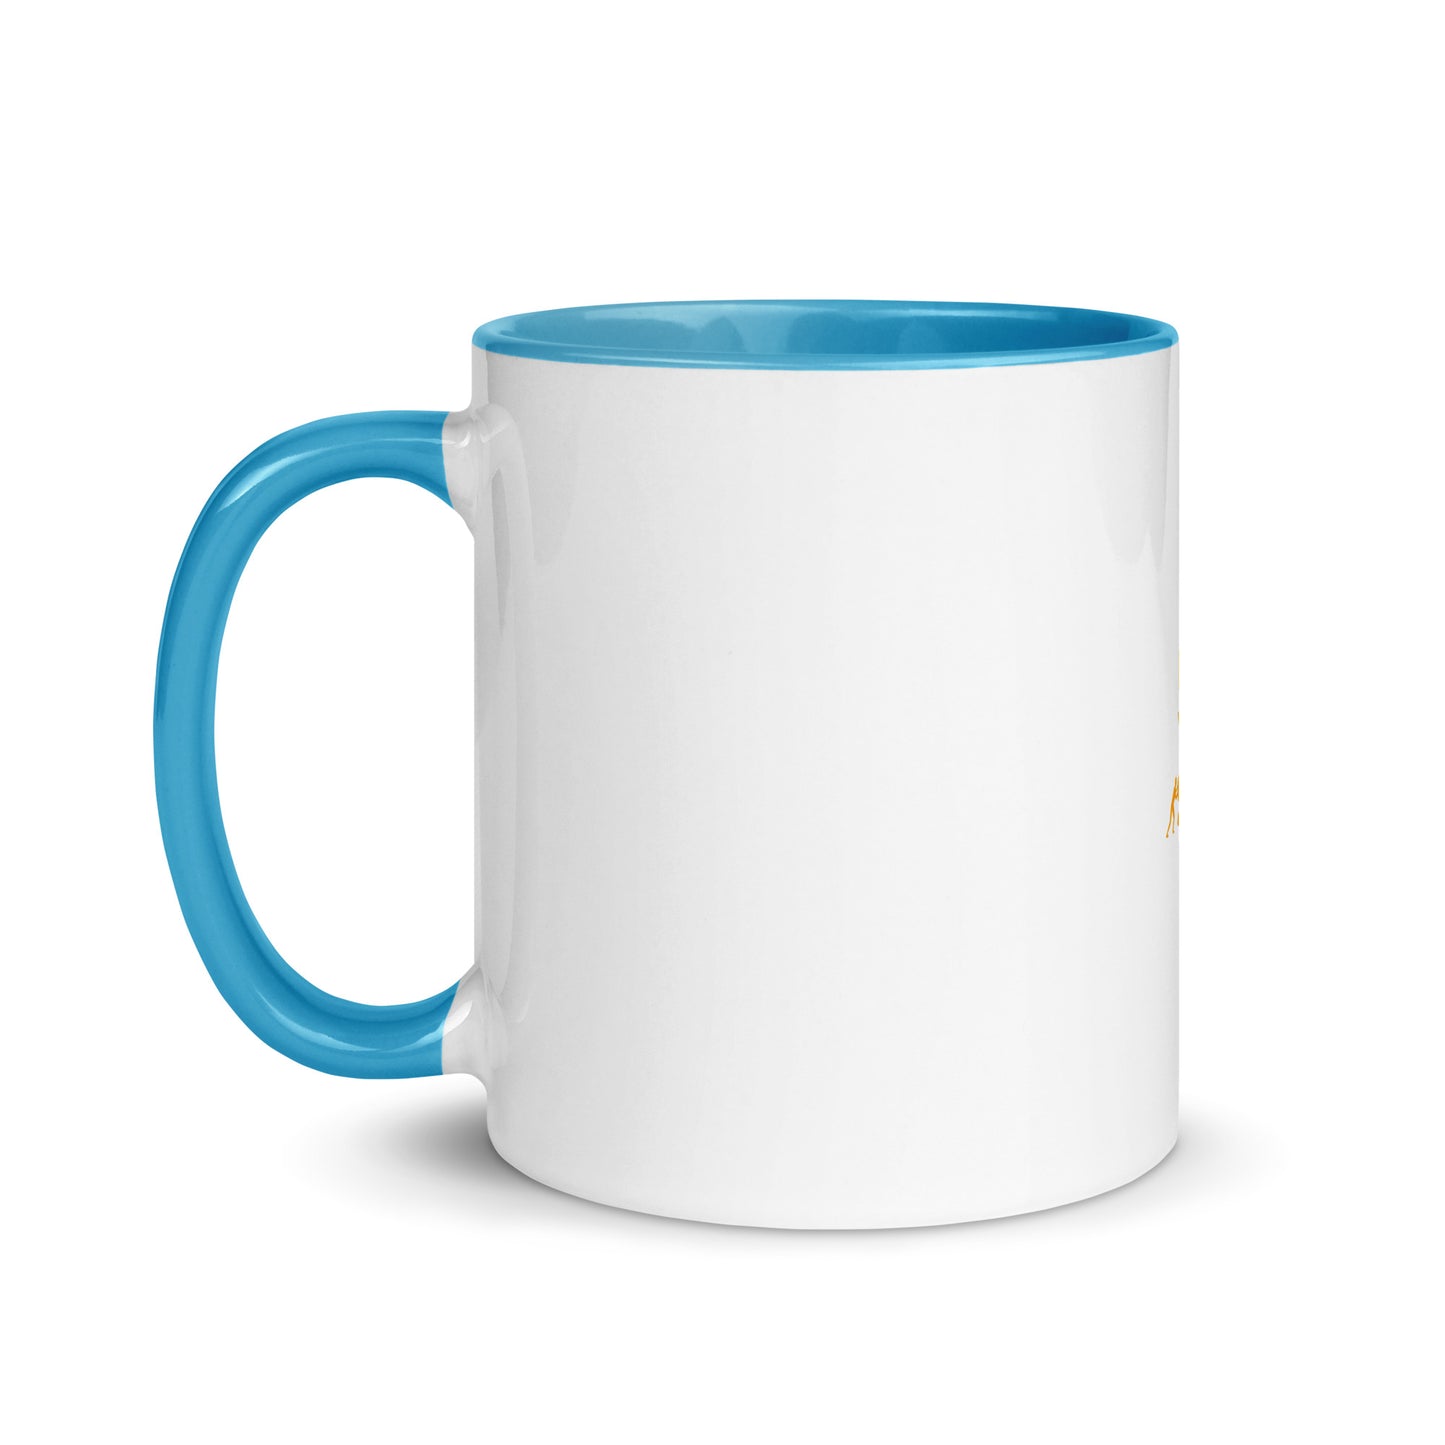 Mug with Color Inside Push Your Self